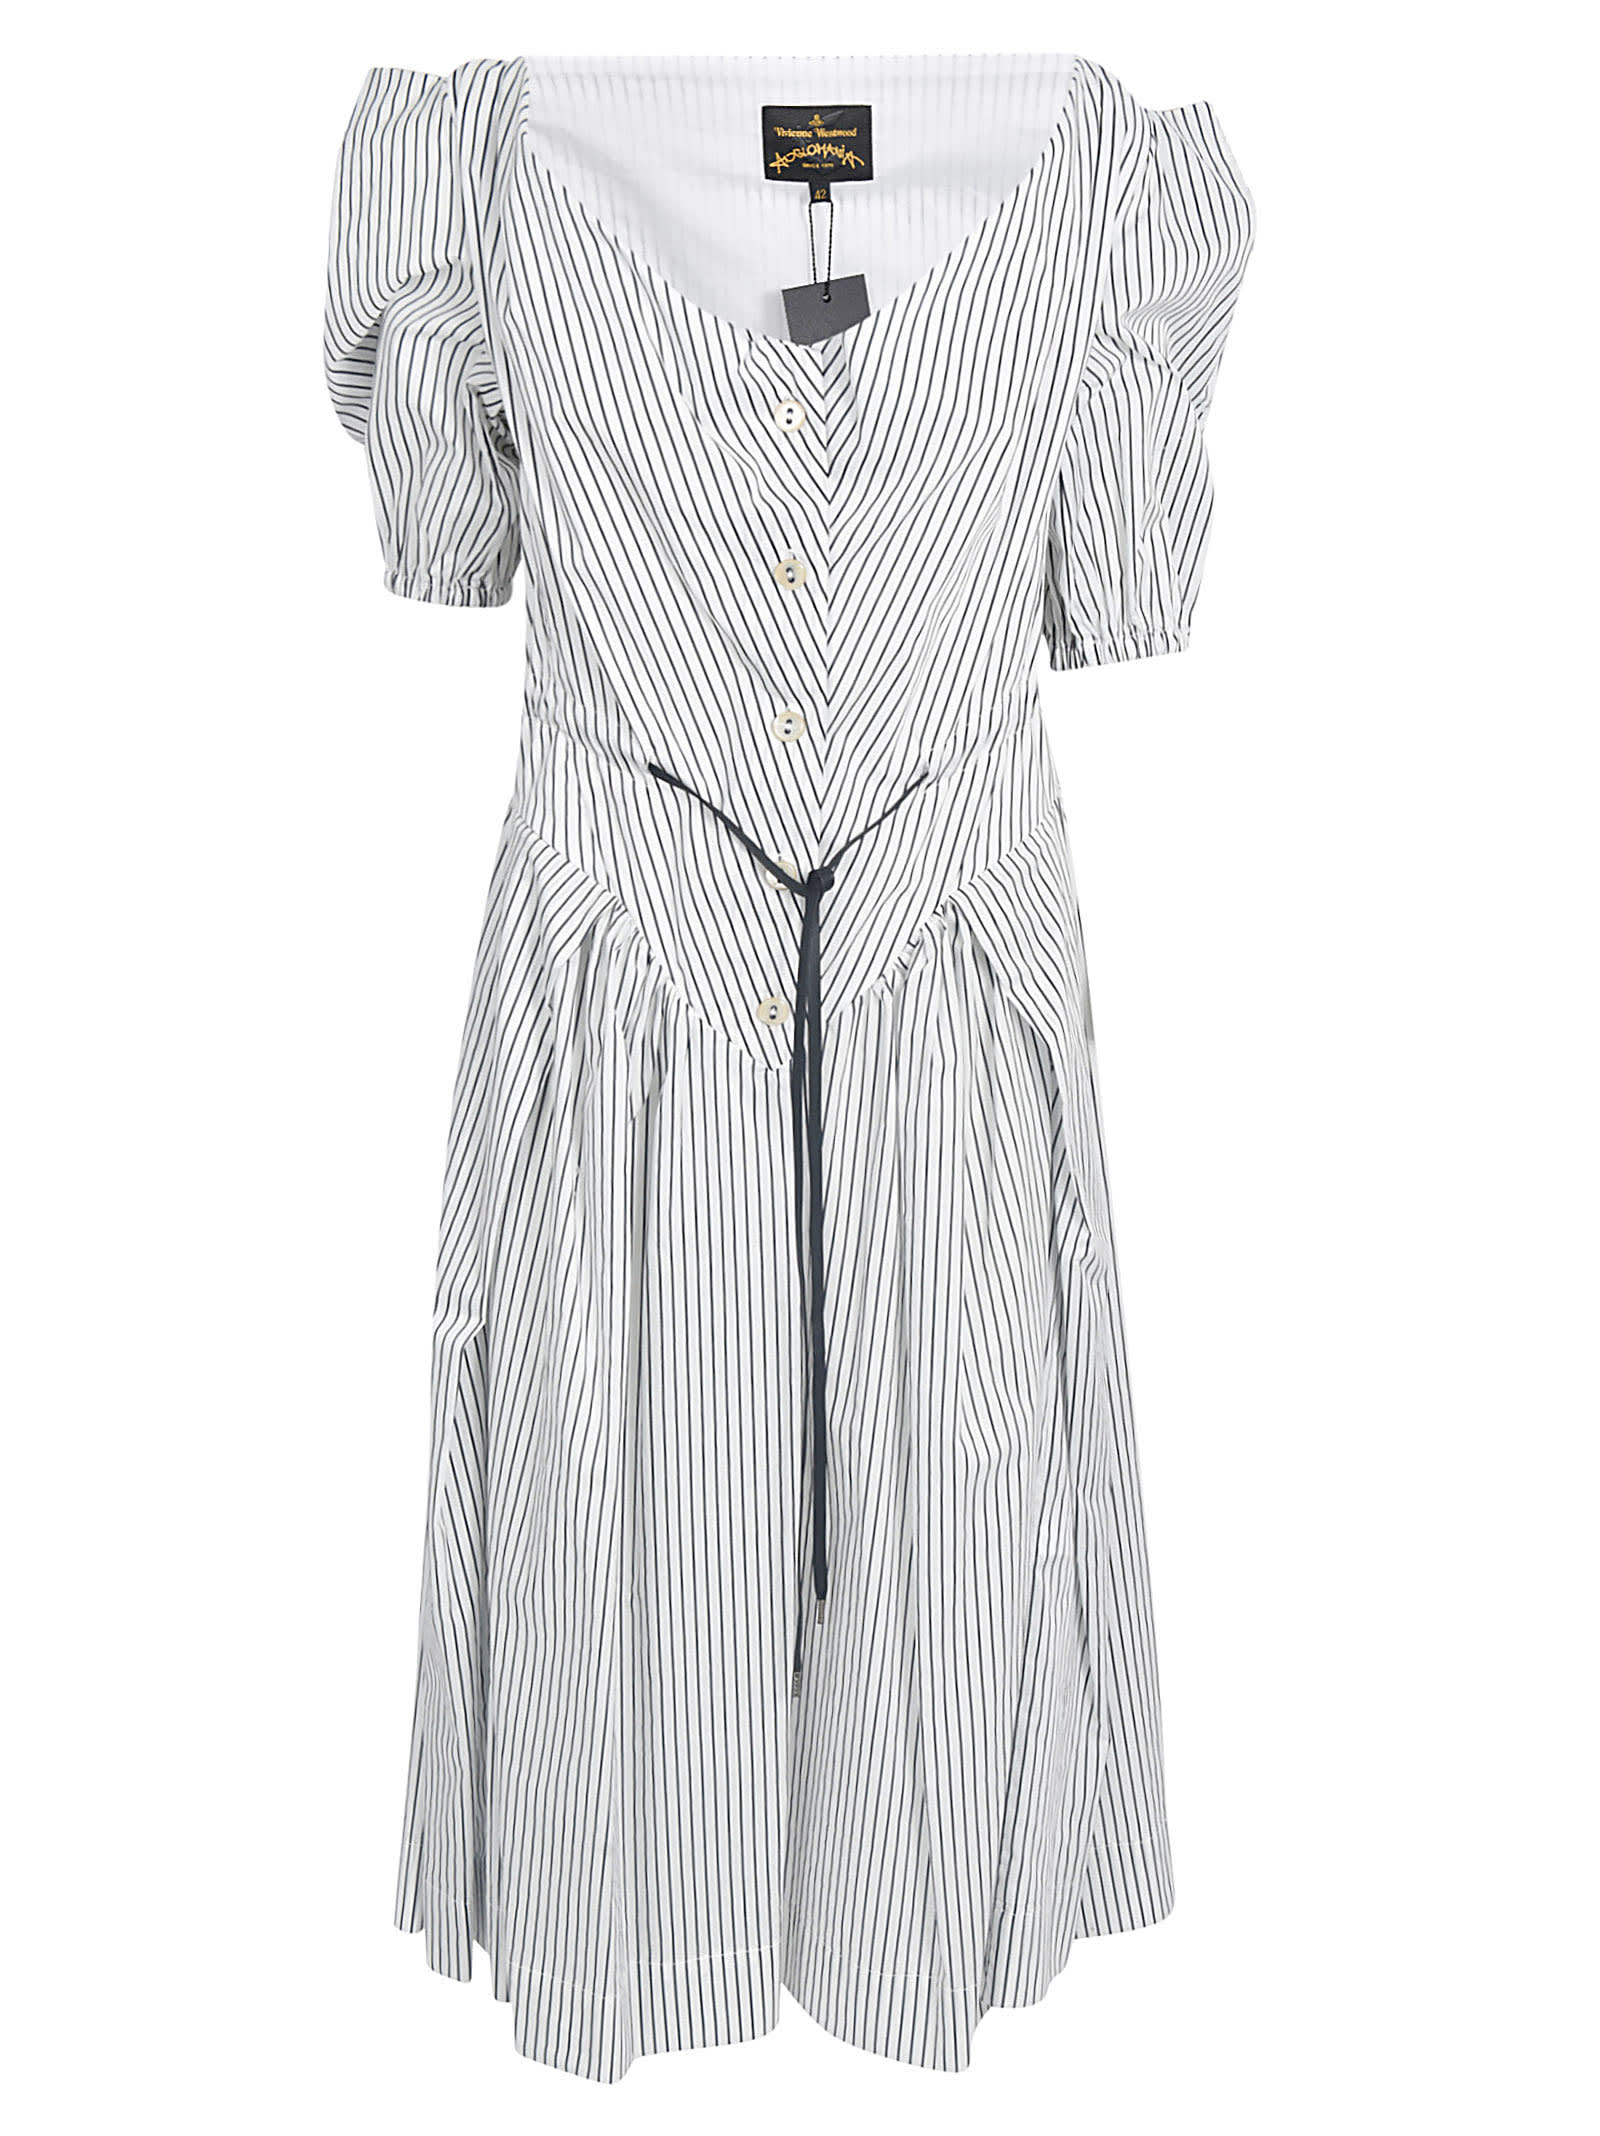 Vivienne Westwood New Saturday Dress In White/navy